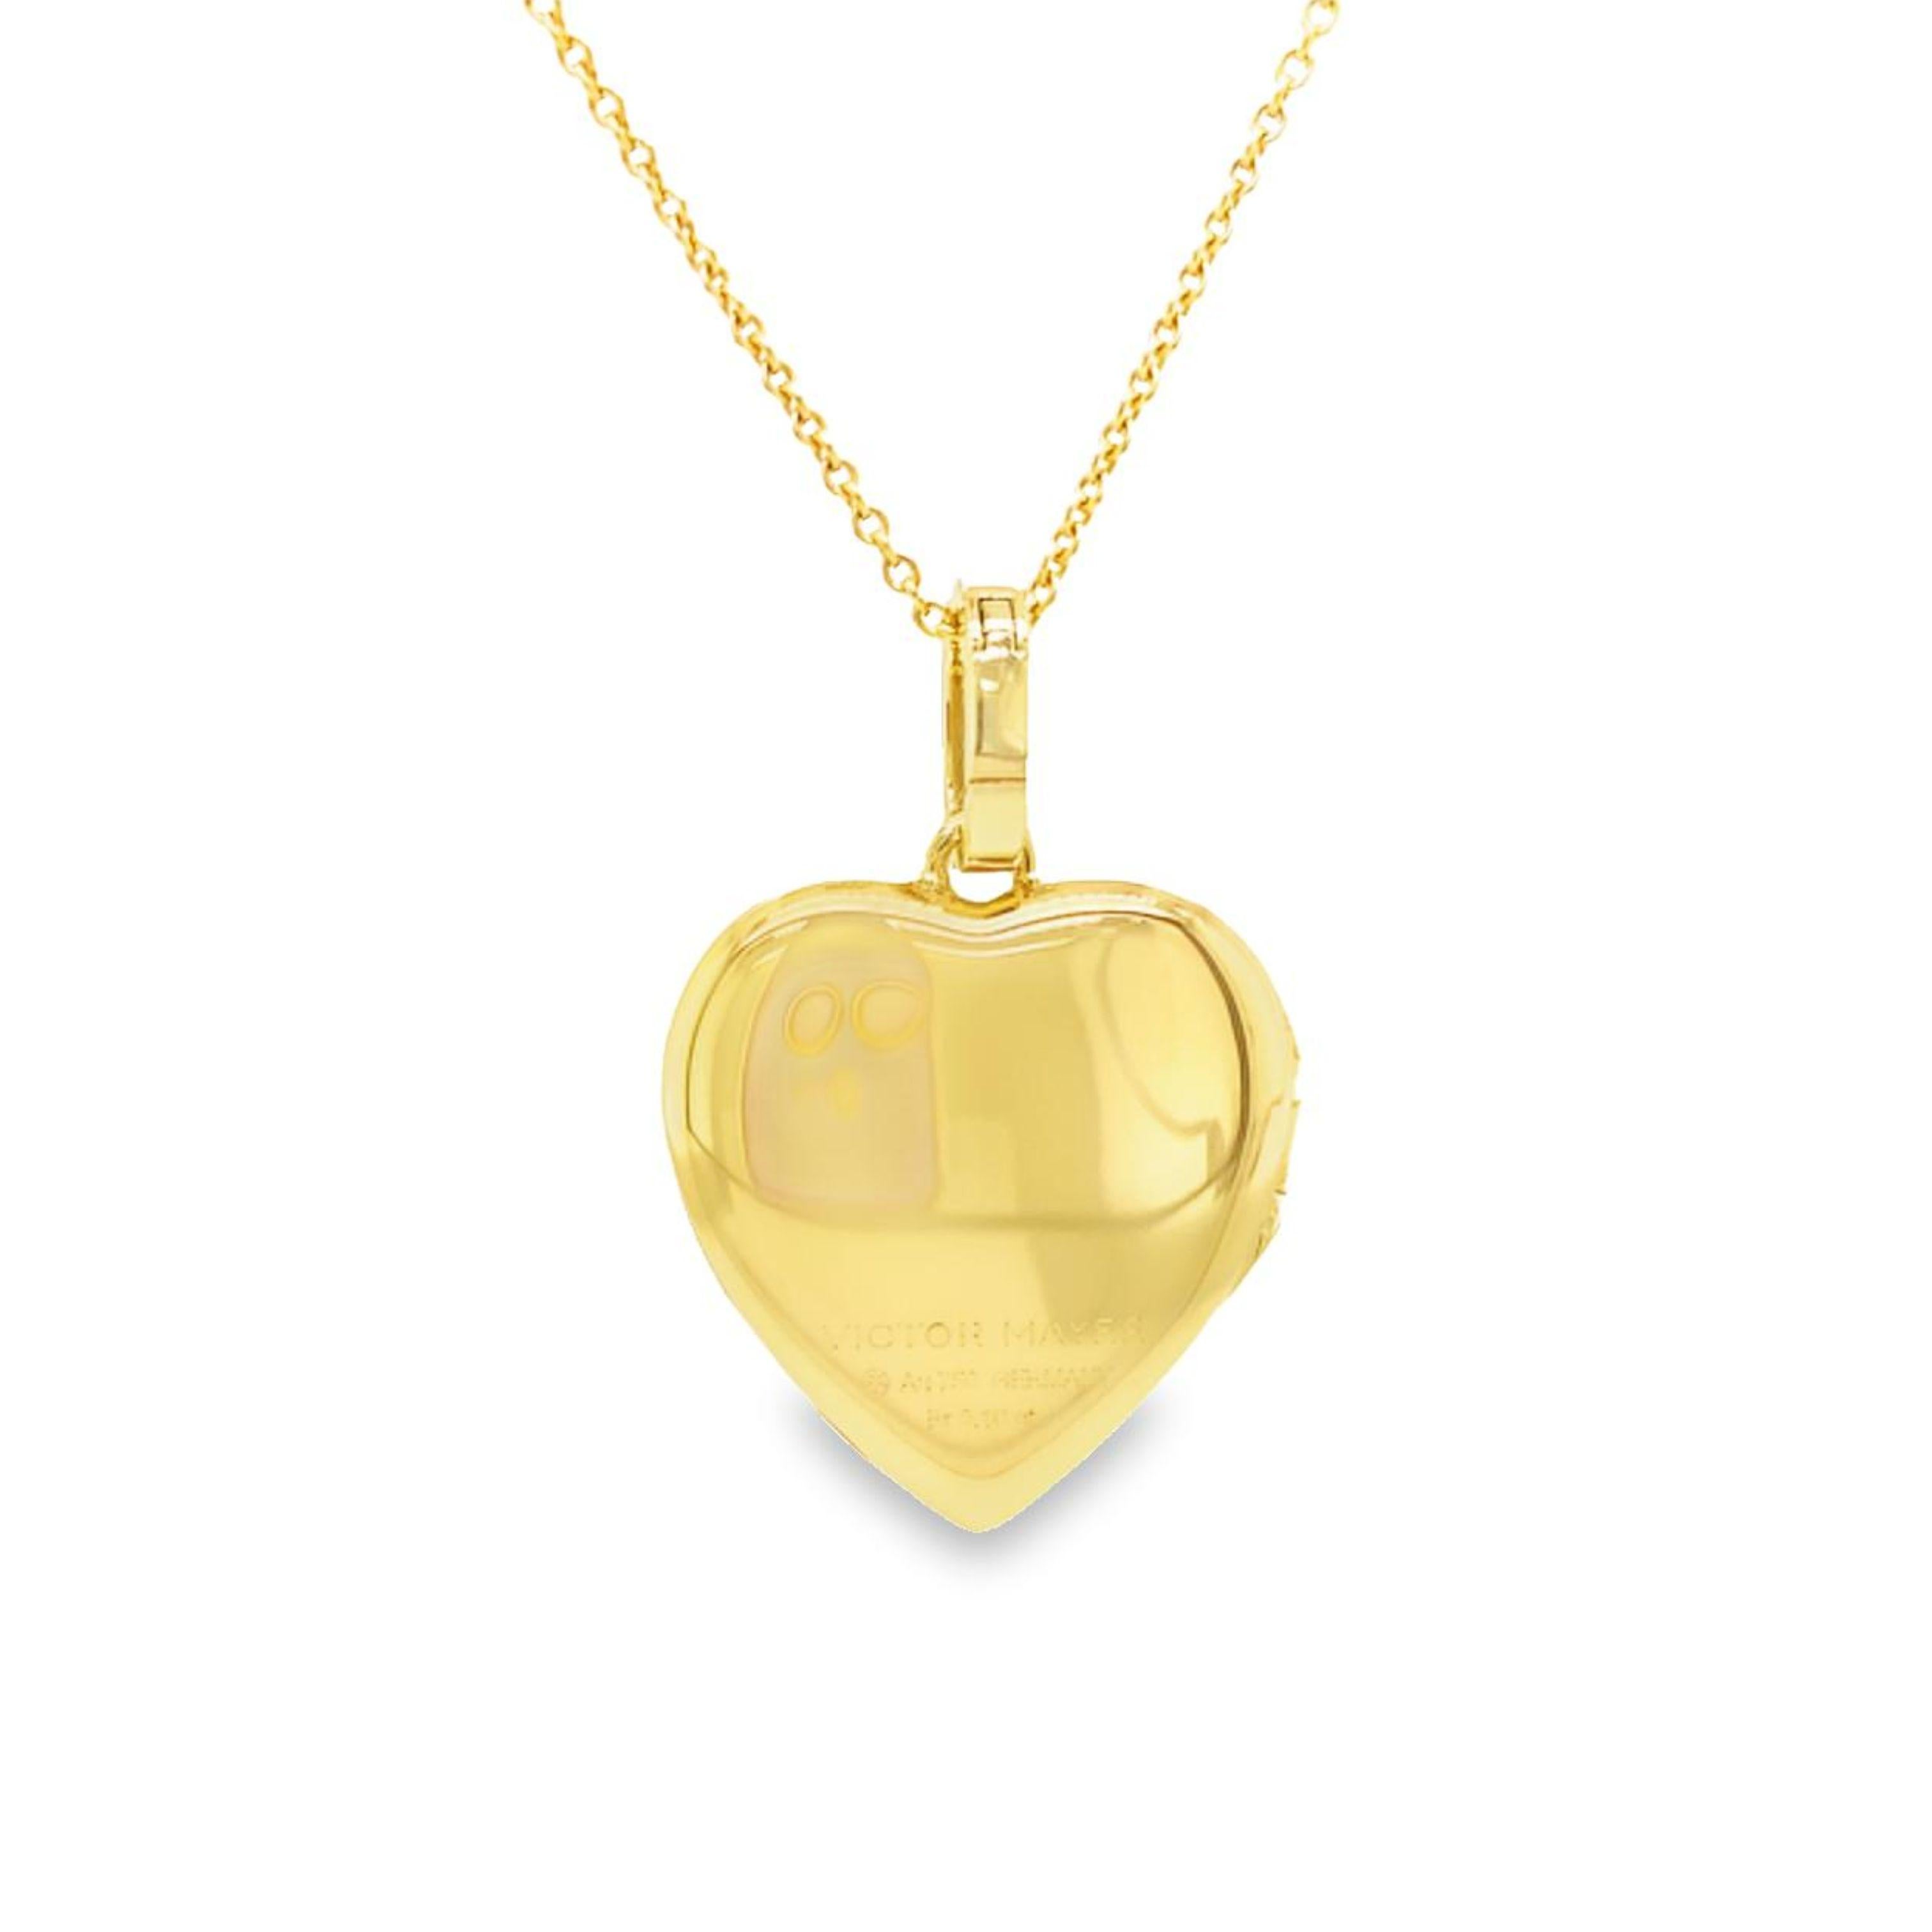 Brilliant Cut Heart Shaped Locket Pendant Necklace, 18k Yellow Gold, 8 Diamonds 0.16ct For Sale